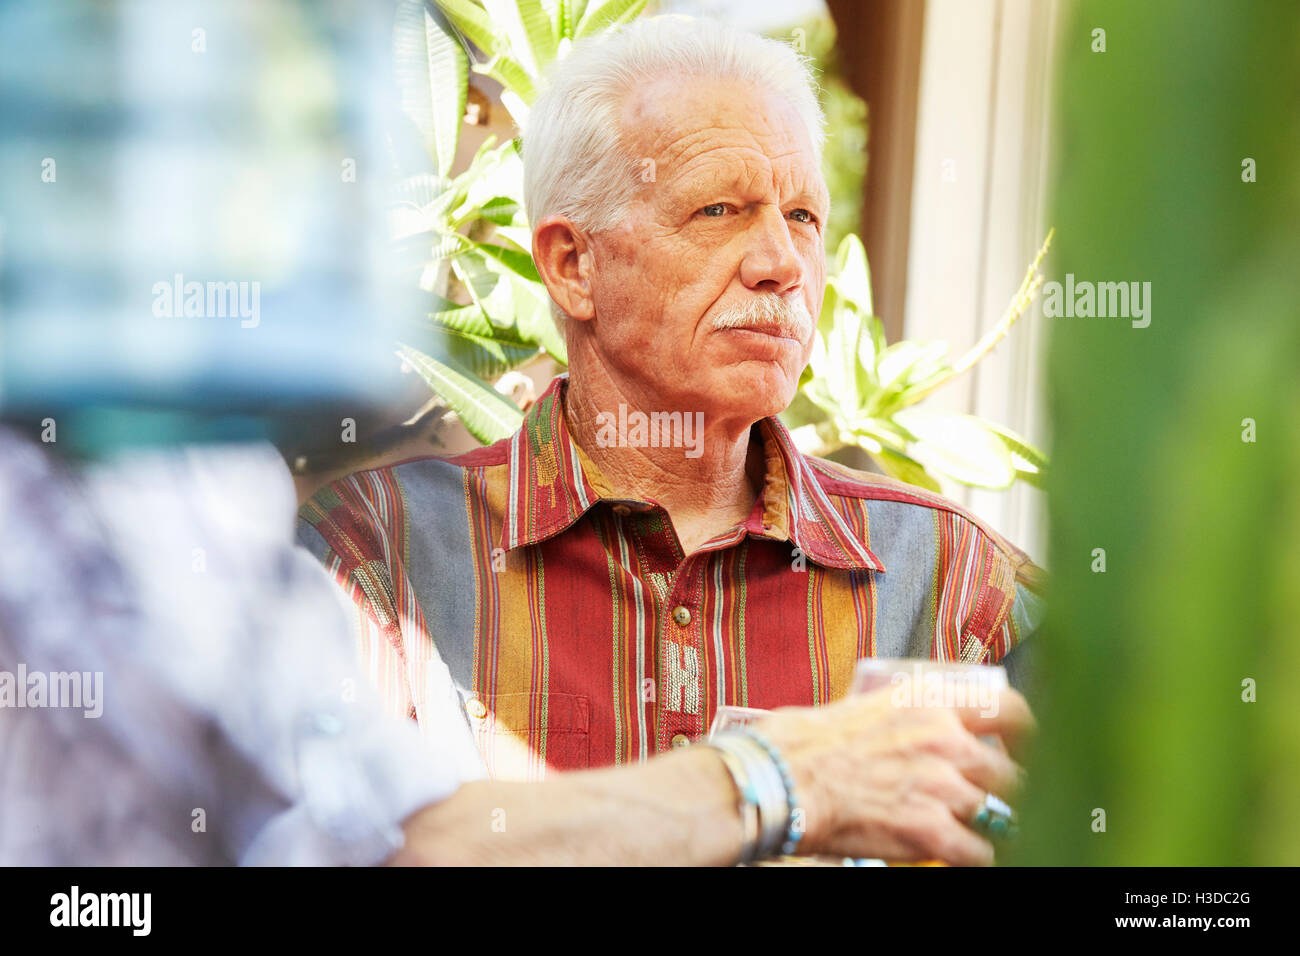 Senior man with moustache sitting outdoors. Stock Photo